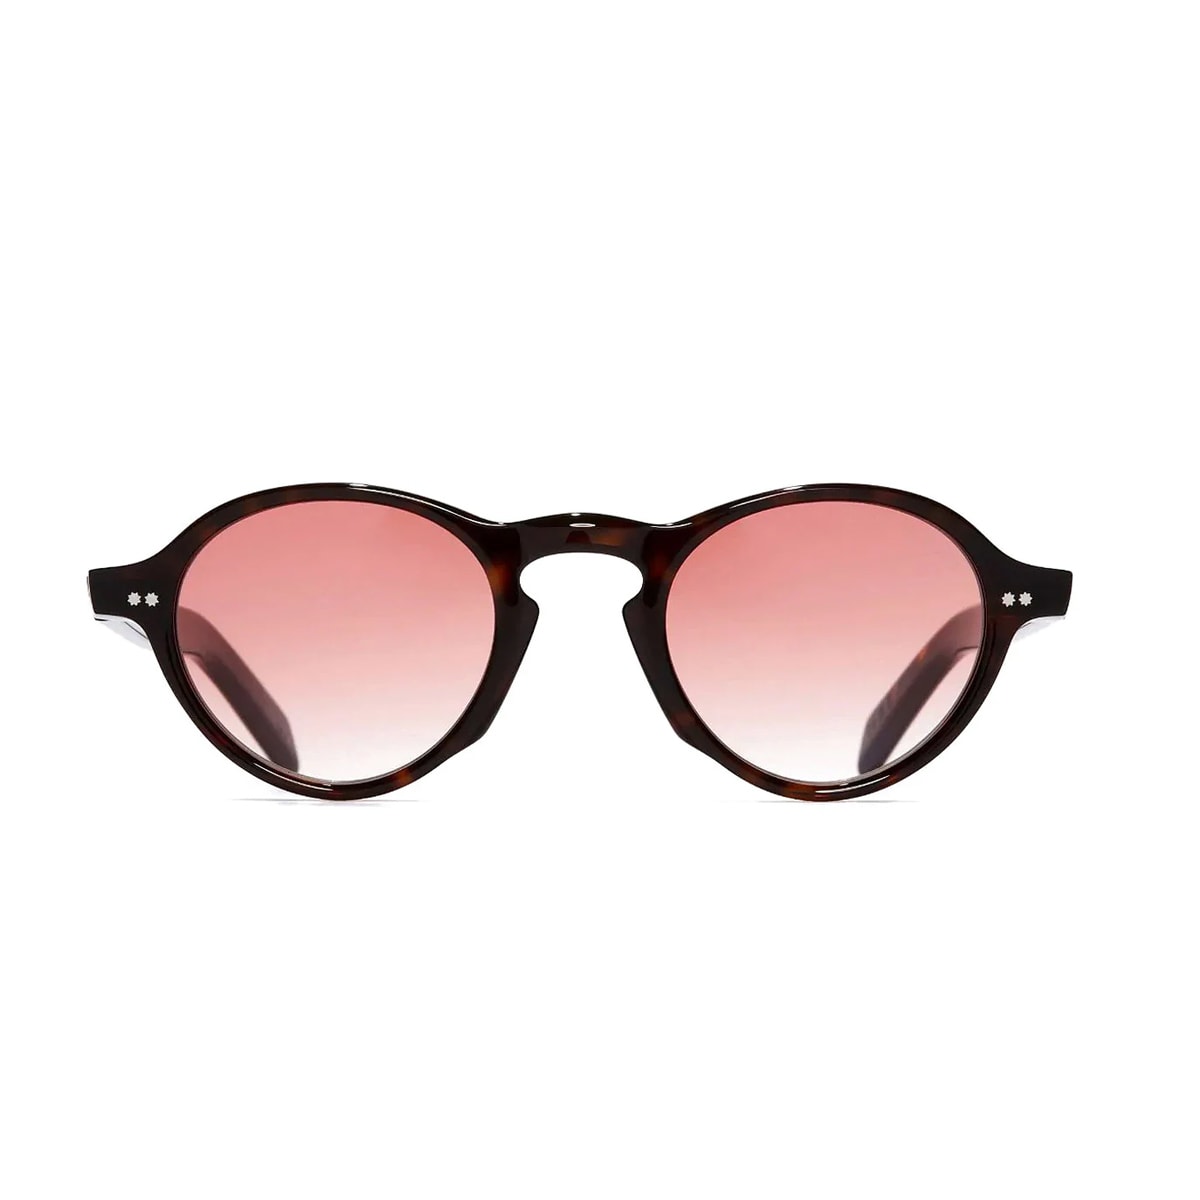 Gr08 03 Havana Sunglasses